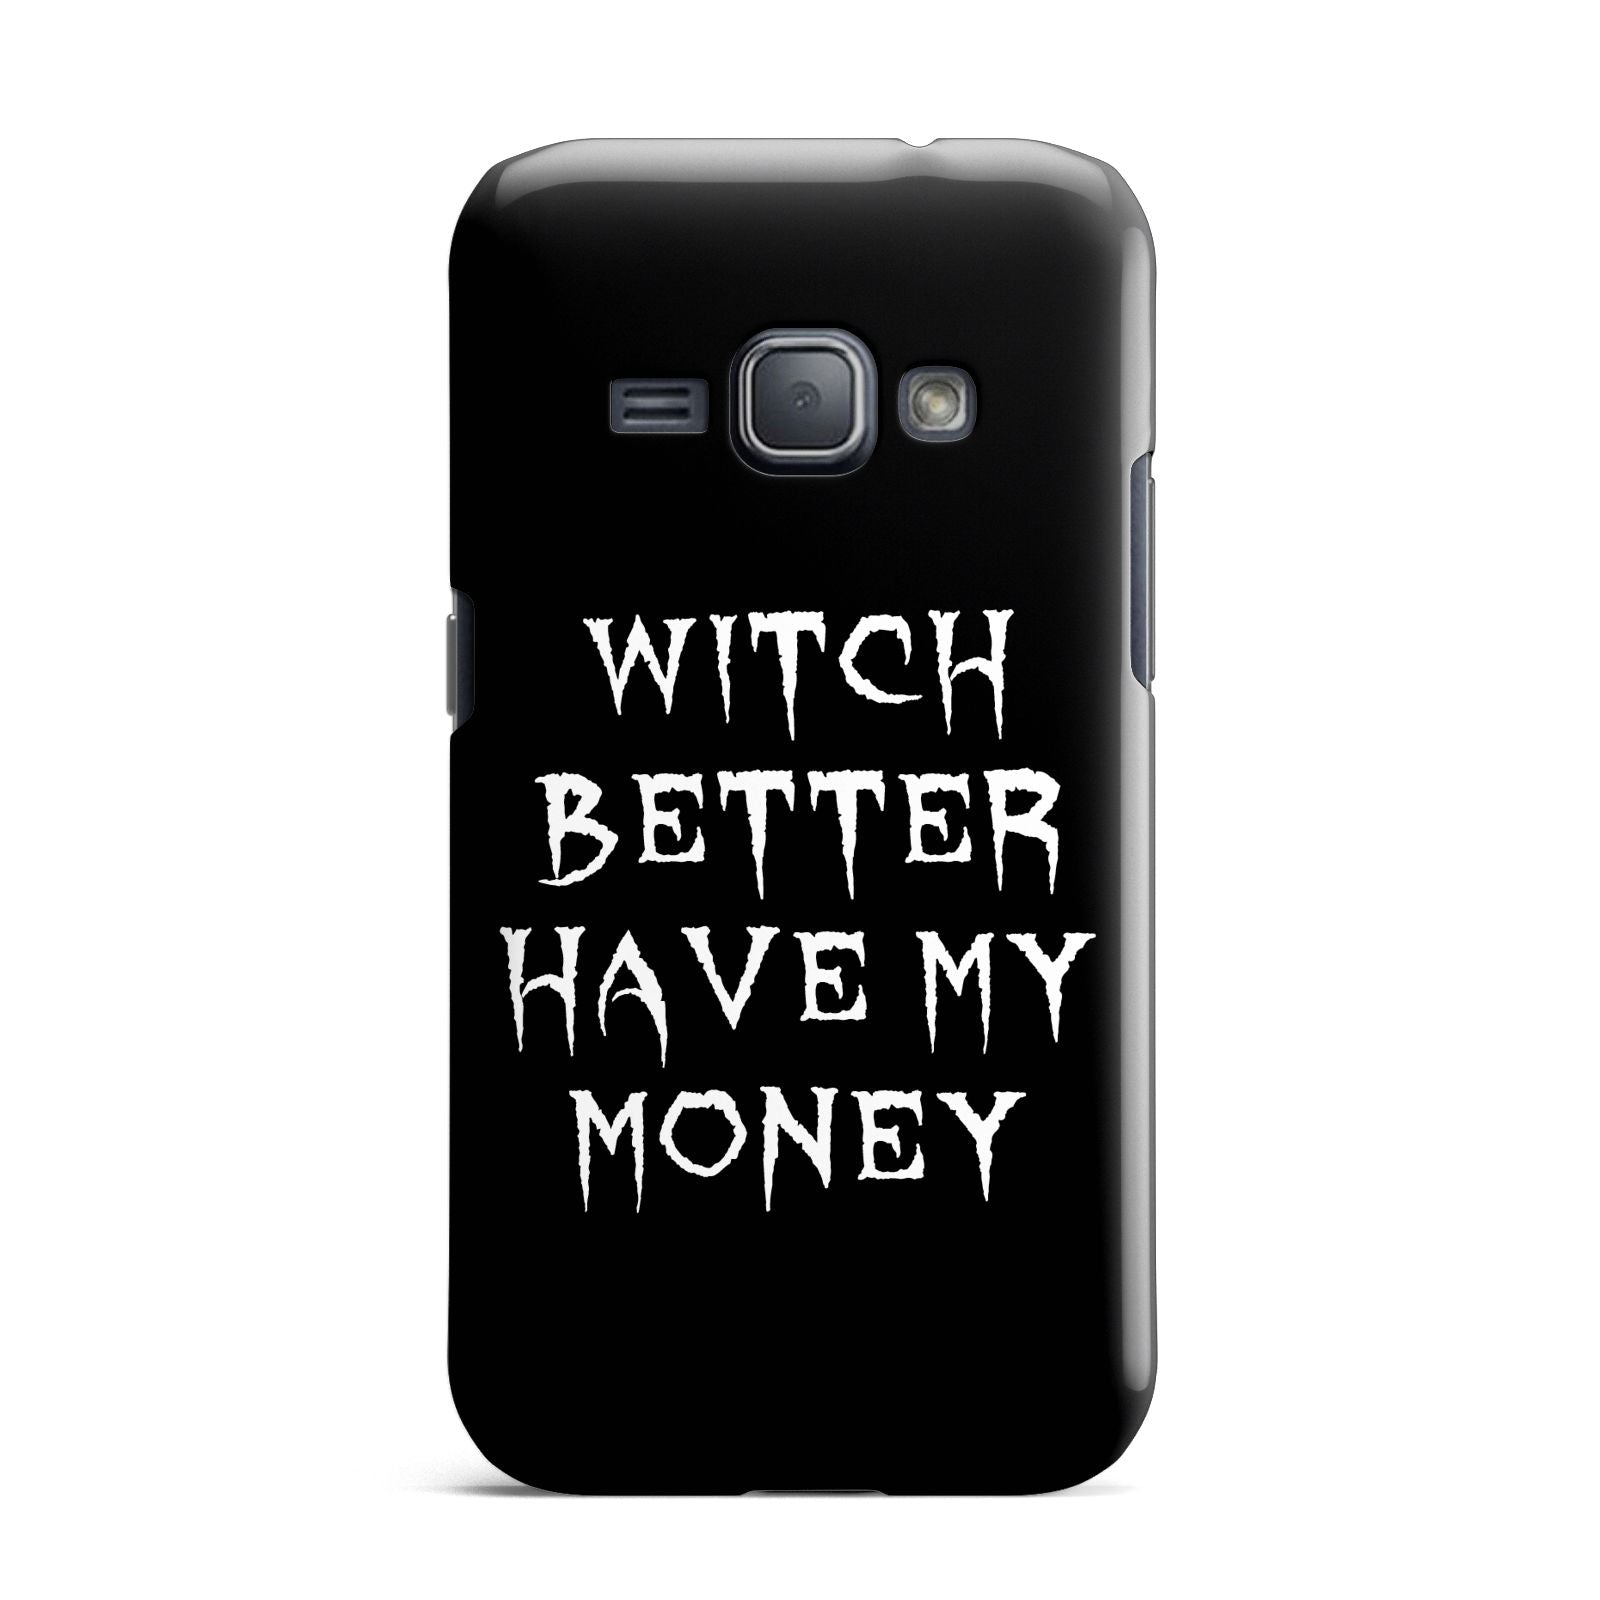 Witch Better Have My Money Samsung Galaxy J1 2016 Case